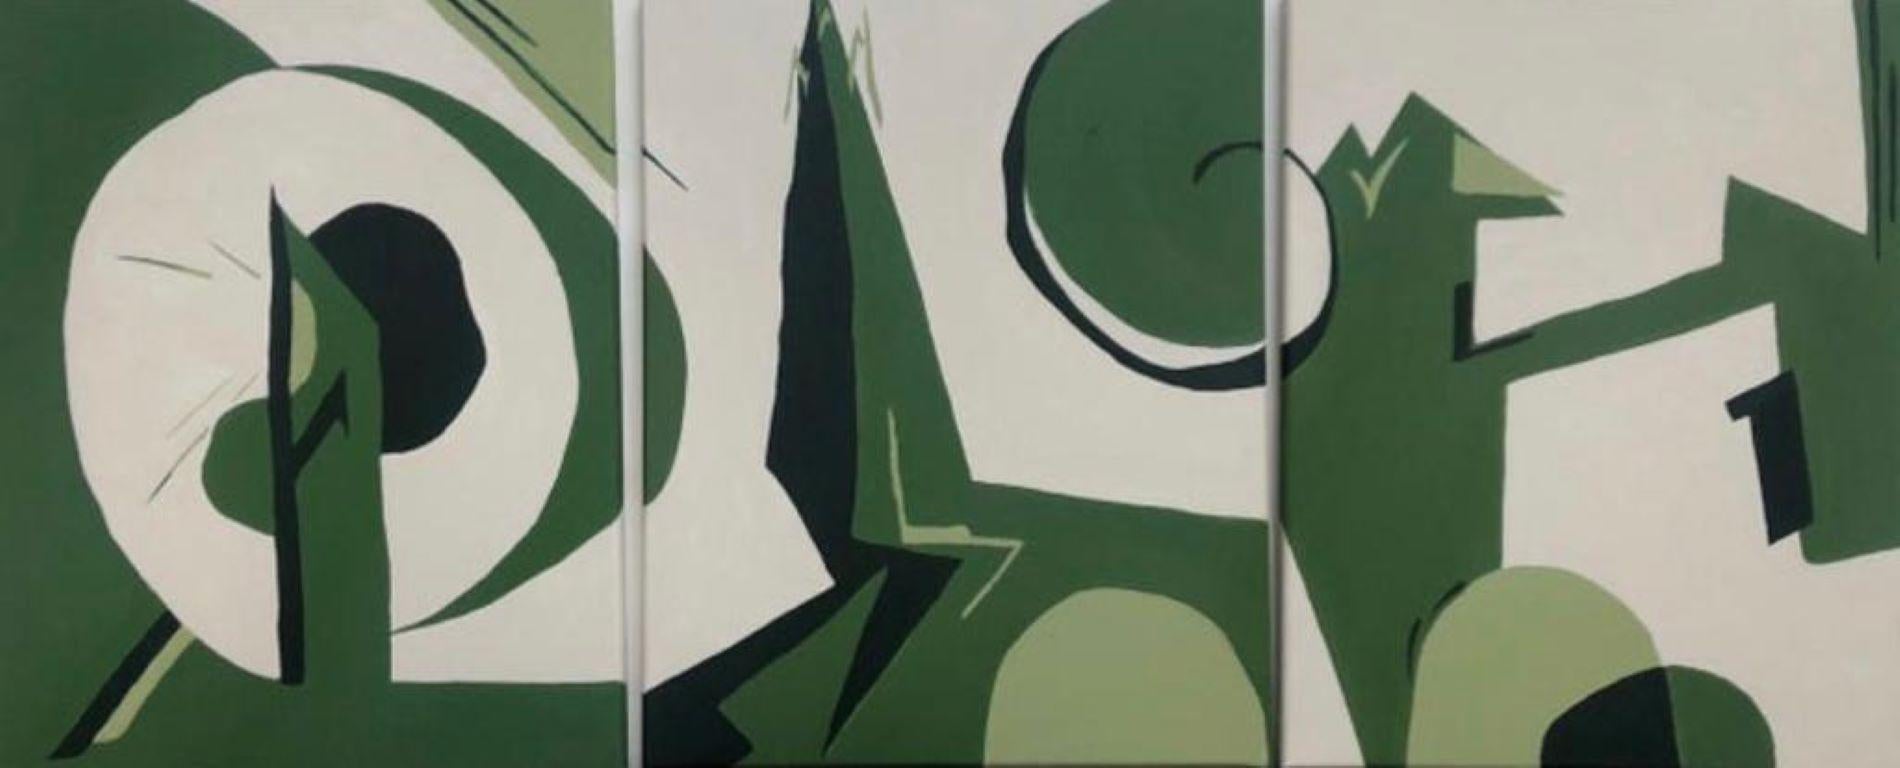 Abstract Painting Minty Ramsey - Artiste britannique contemporain Grand Triptyque Ensemble de 3 - Abstraits verts